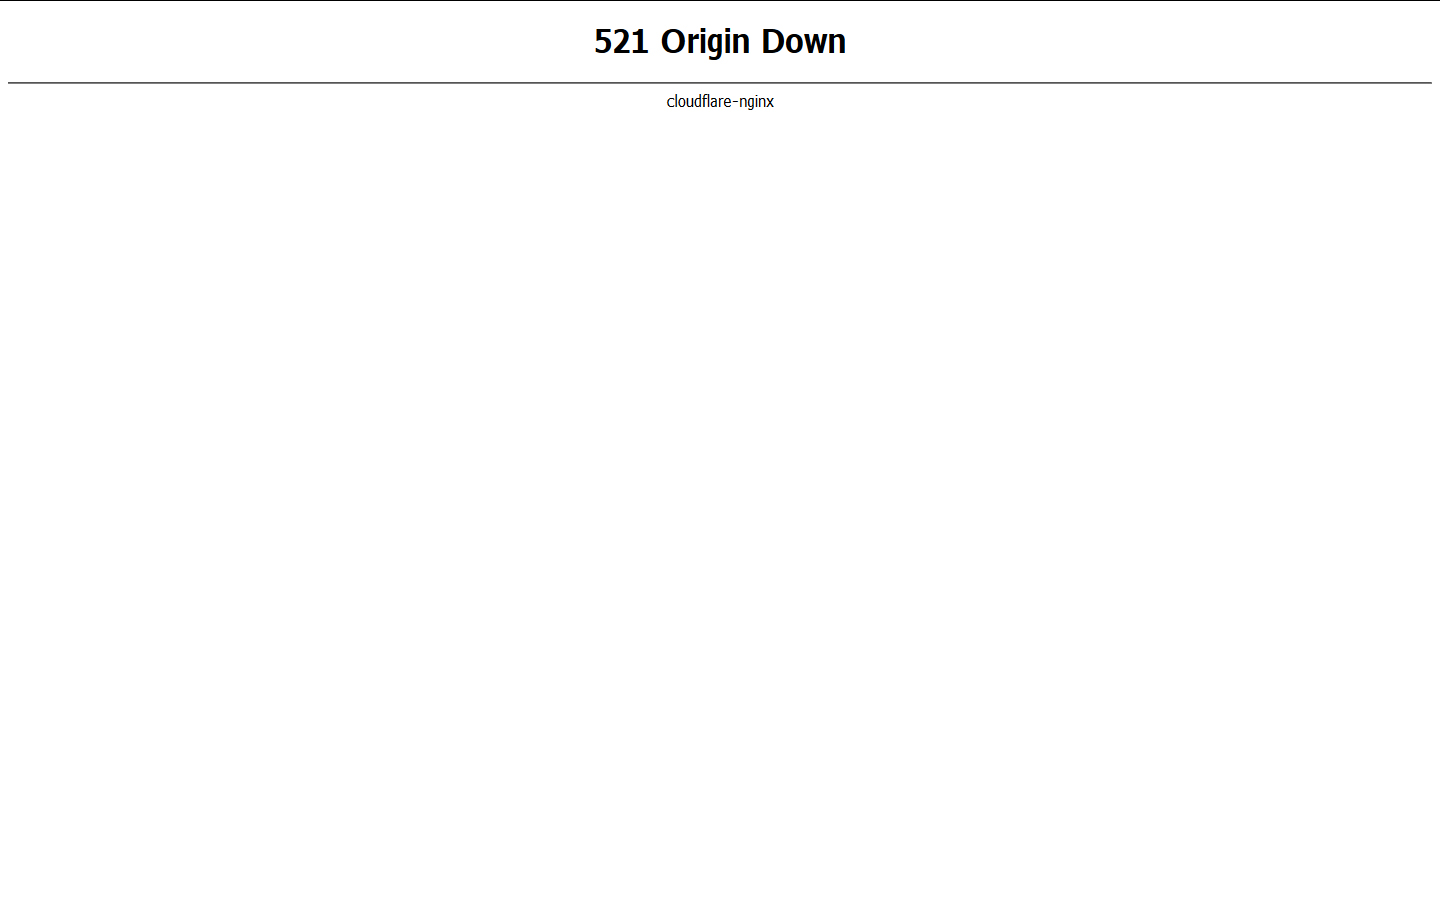 Origin Down